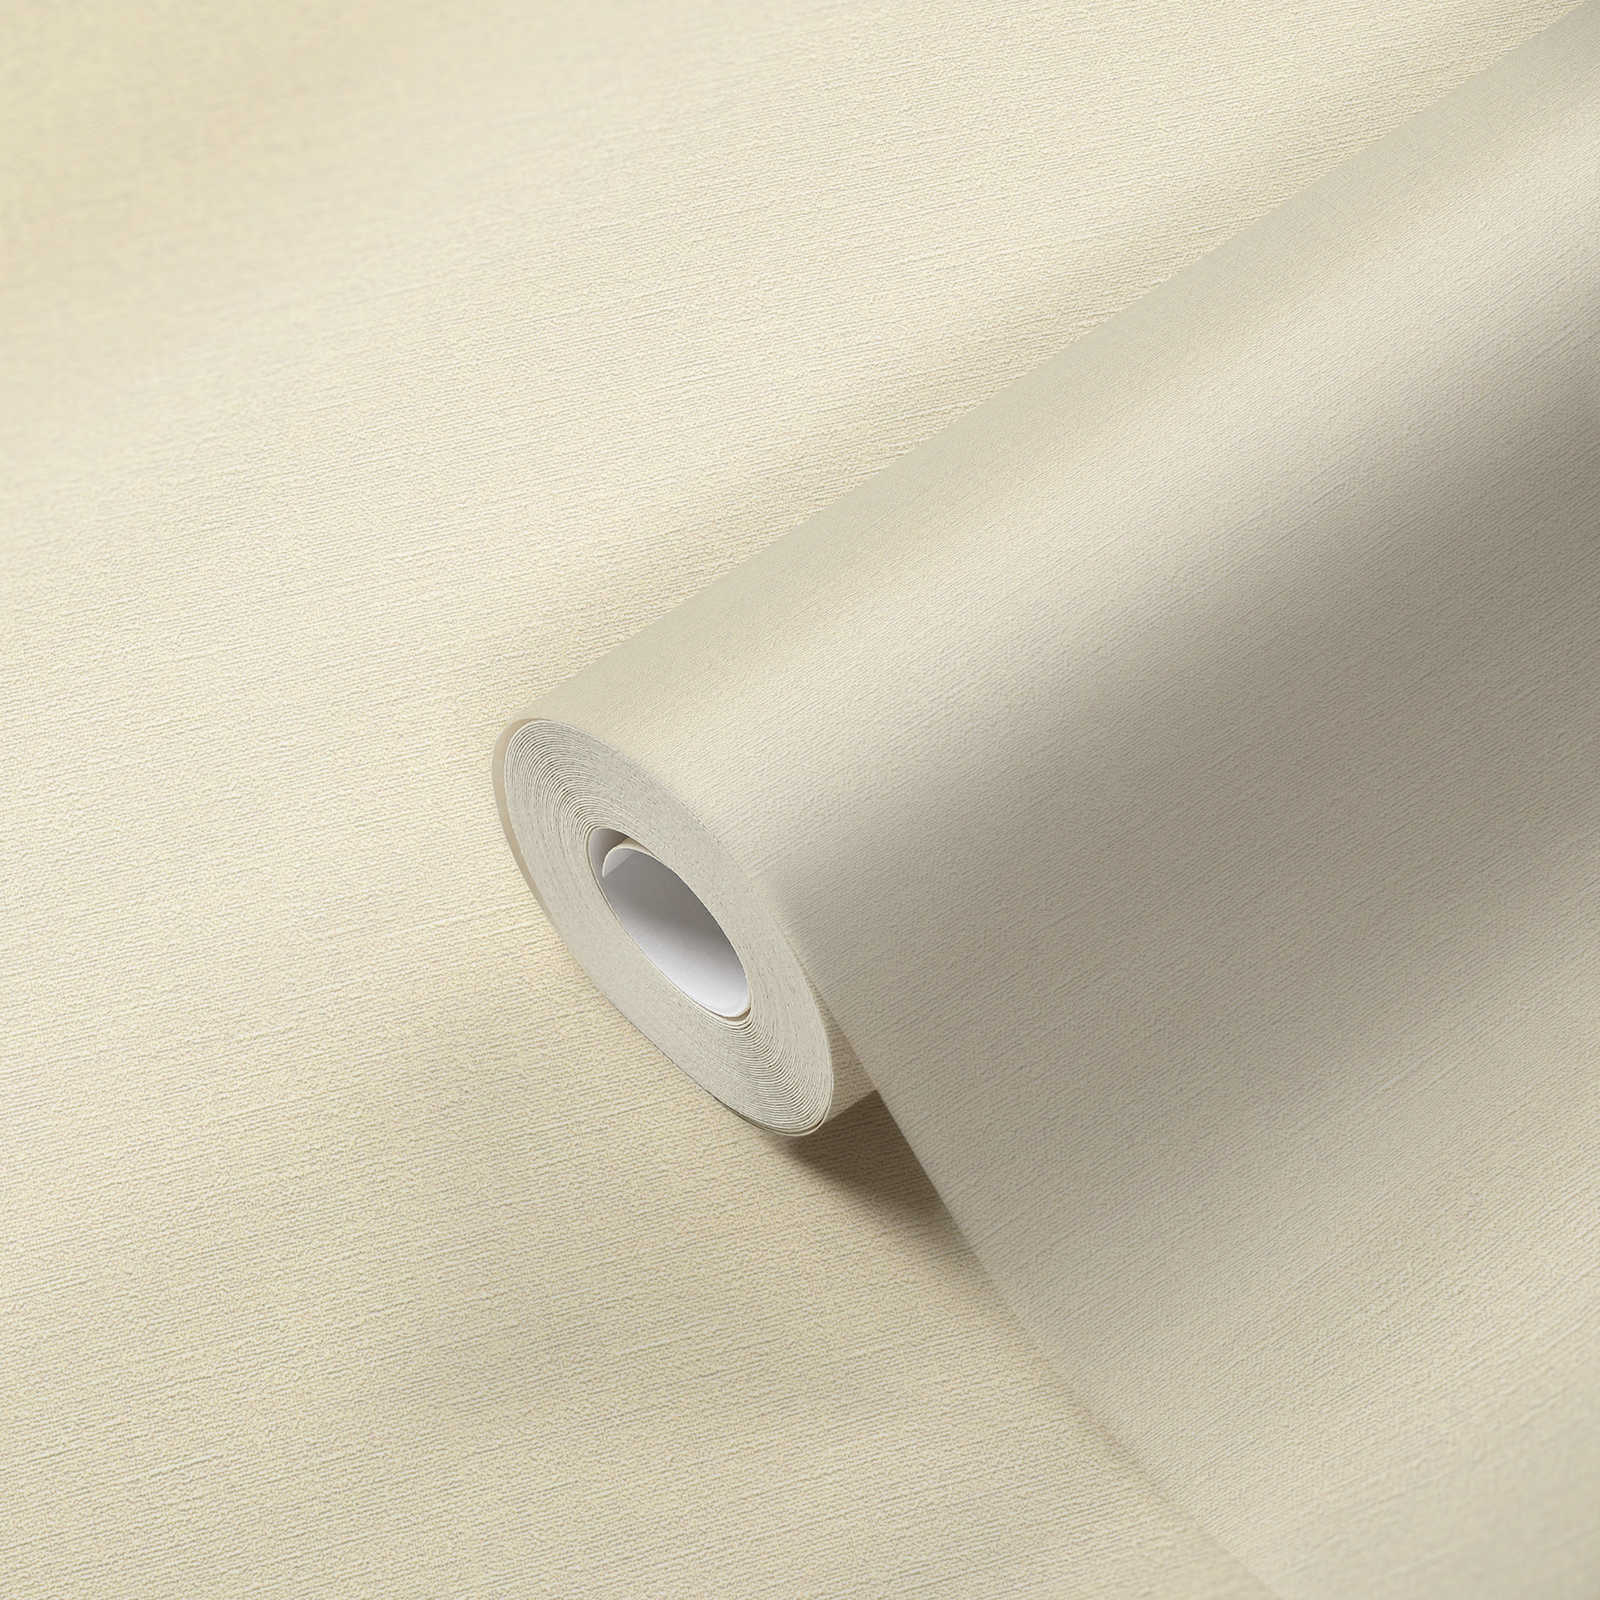             Yellow wallpaper plain & matte with texture pattern
        